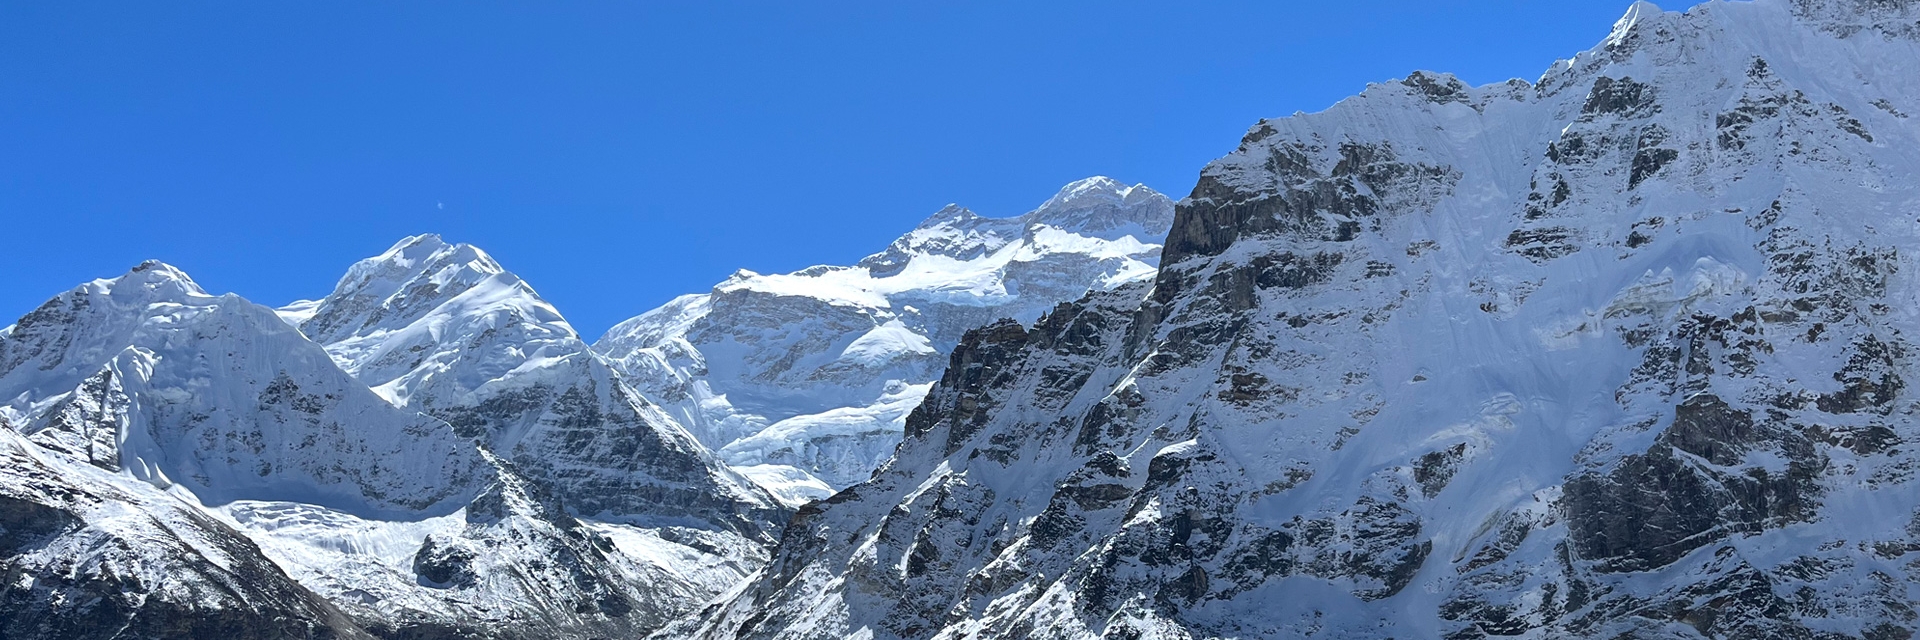 Kanchenjunga Region Trek